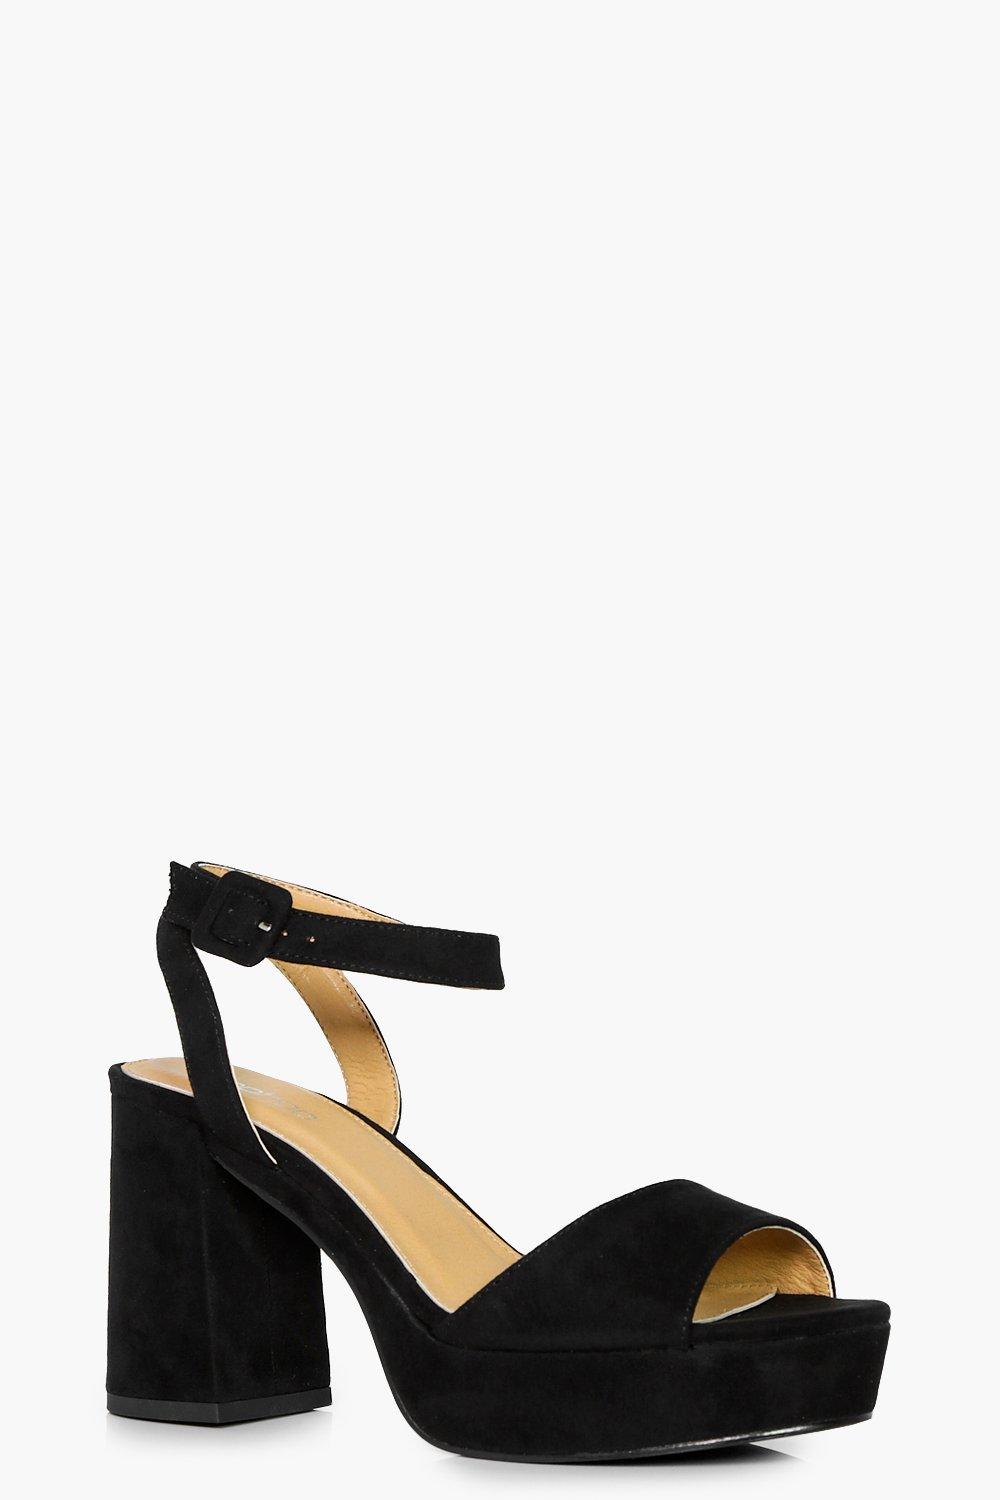 black low platform heels